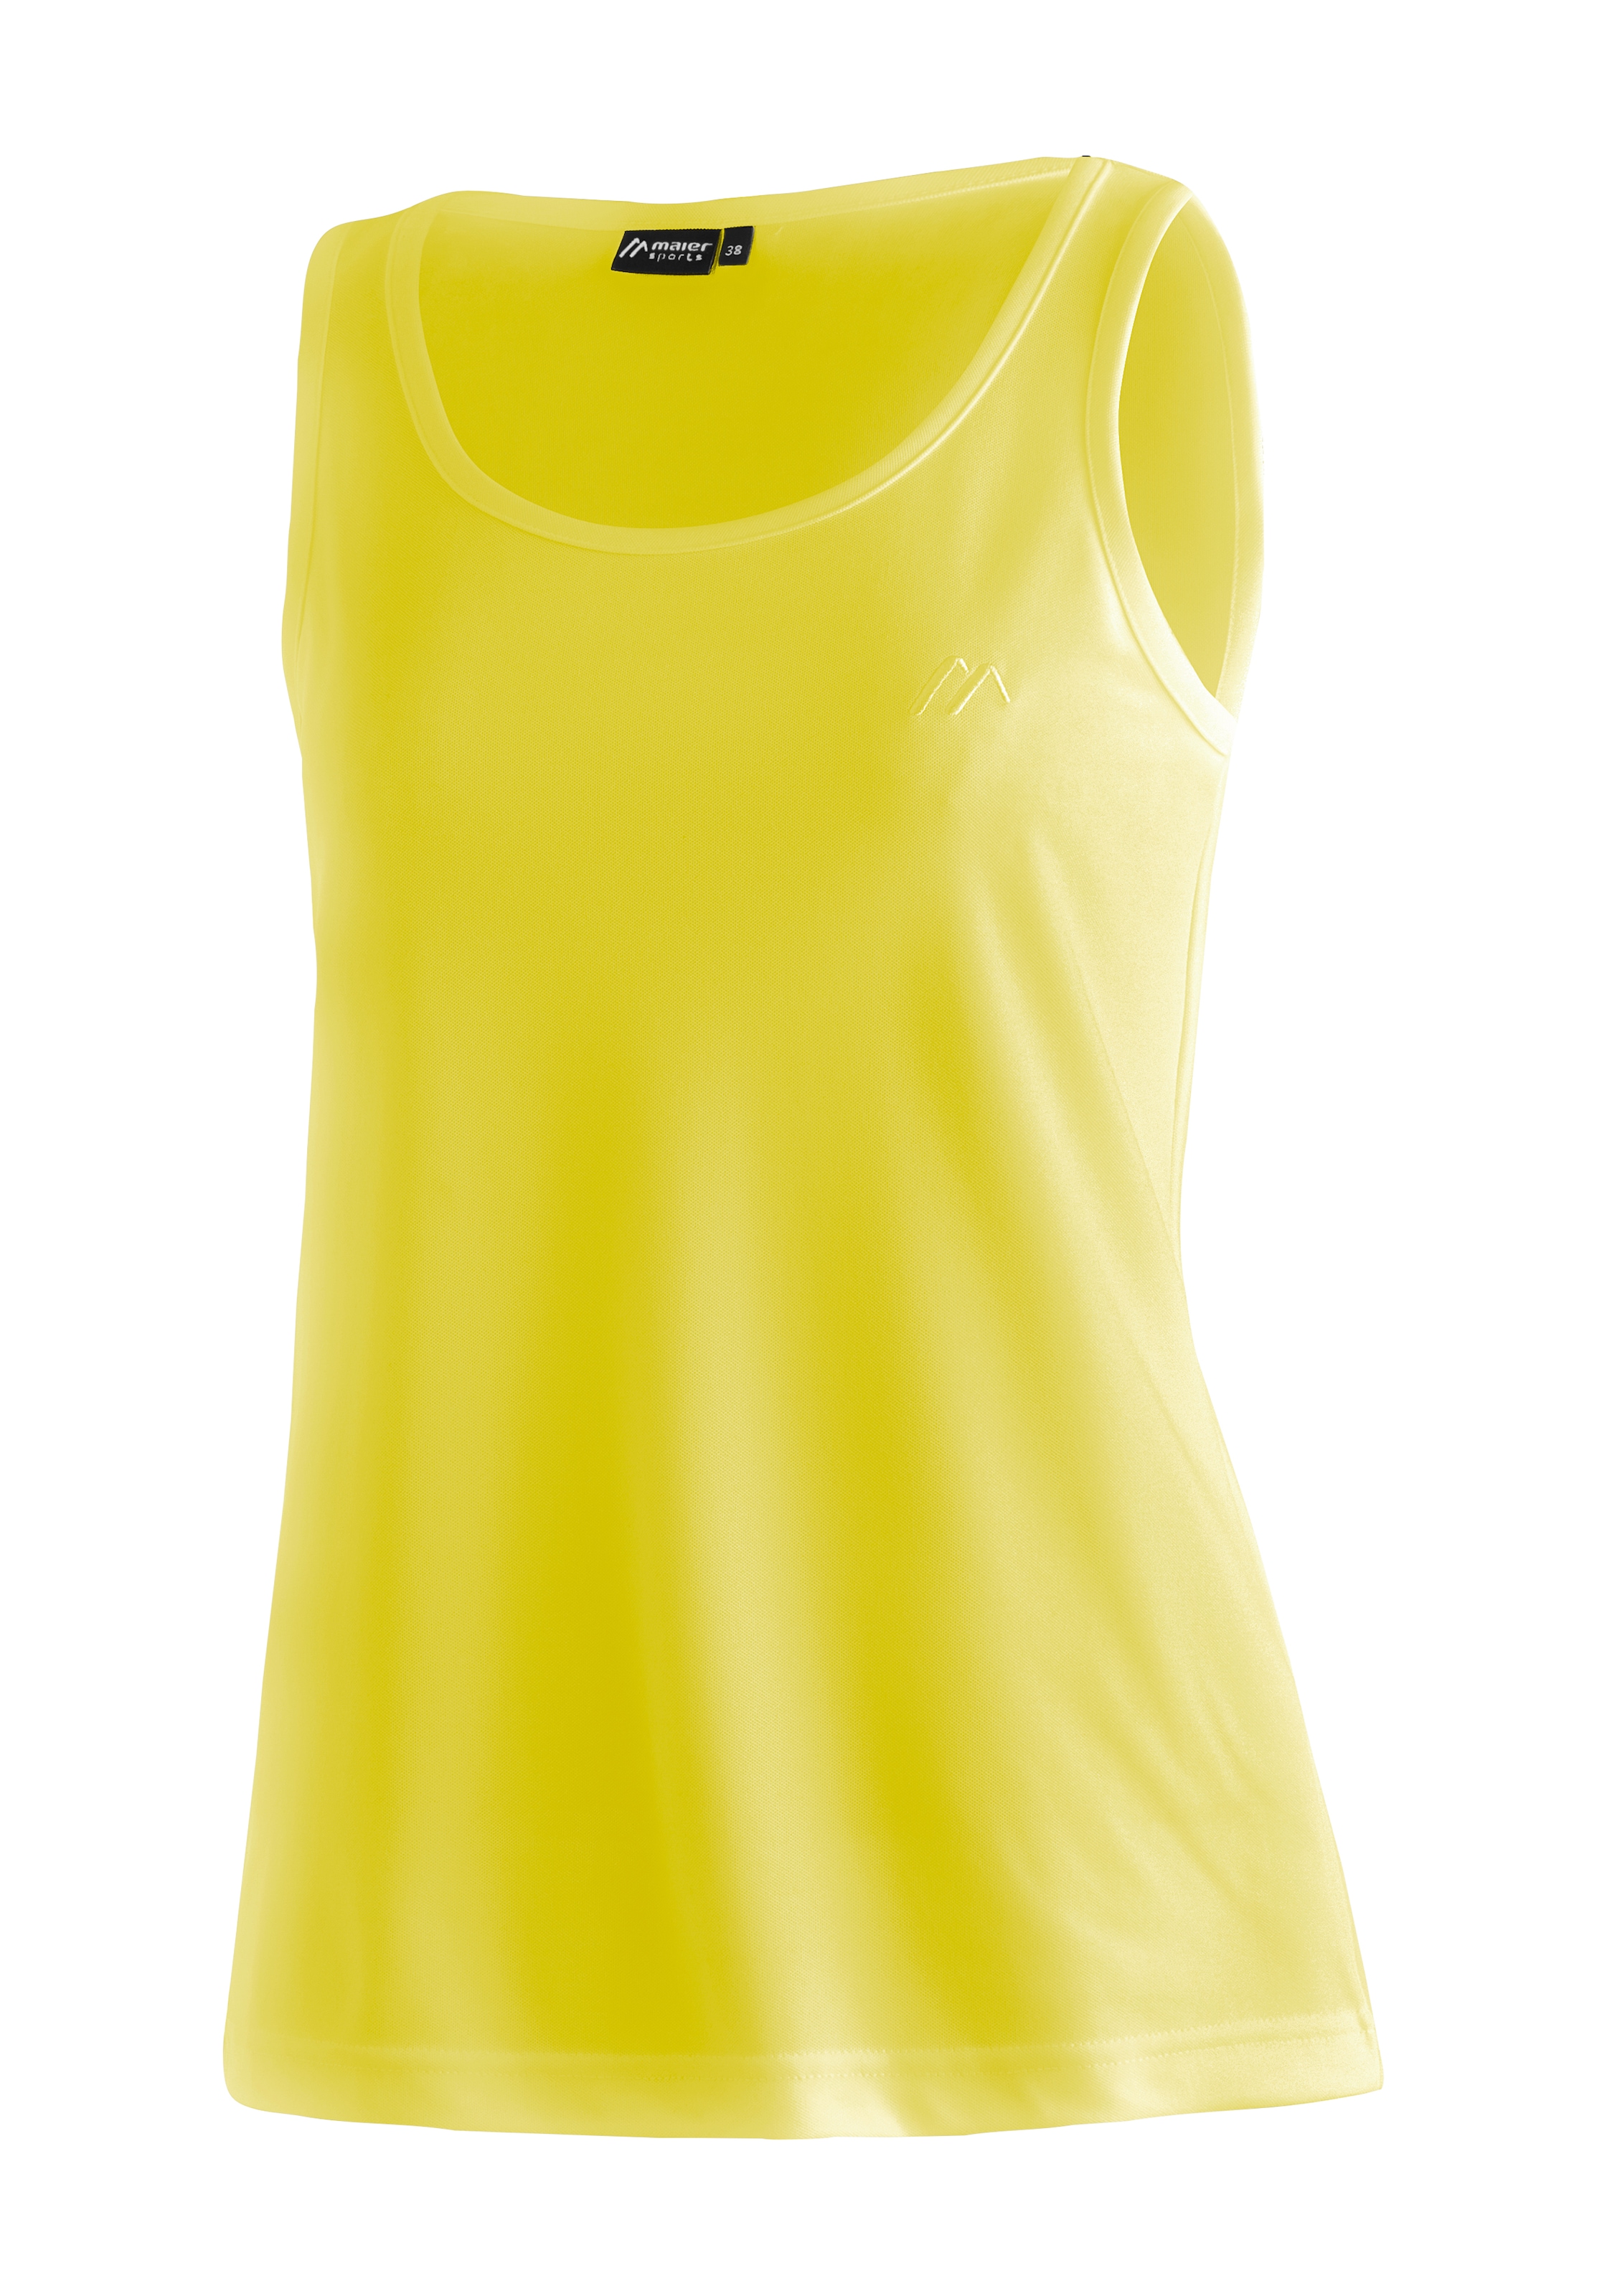 Maier Sports Outdoor-Aktivitäten, Tank-Top Shirt »Petra«, Funktionsshirt kaufen ärmelloses für Damen Sport und